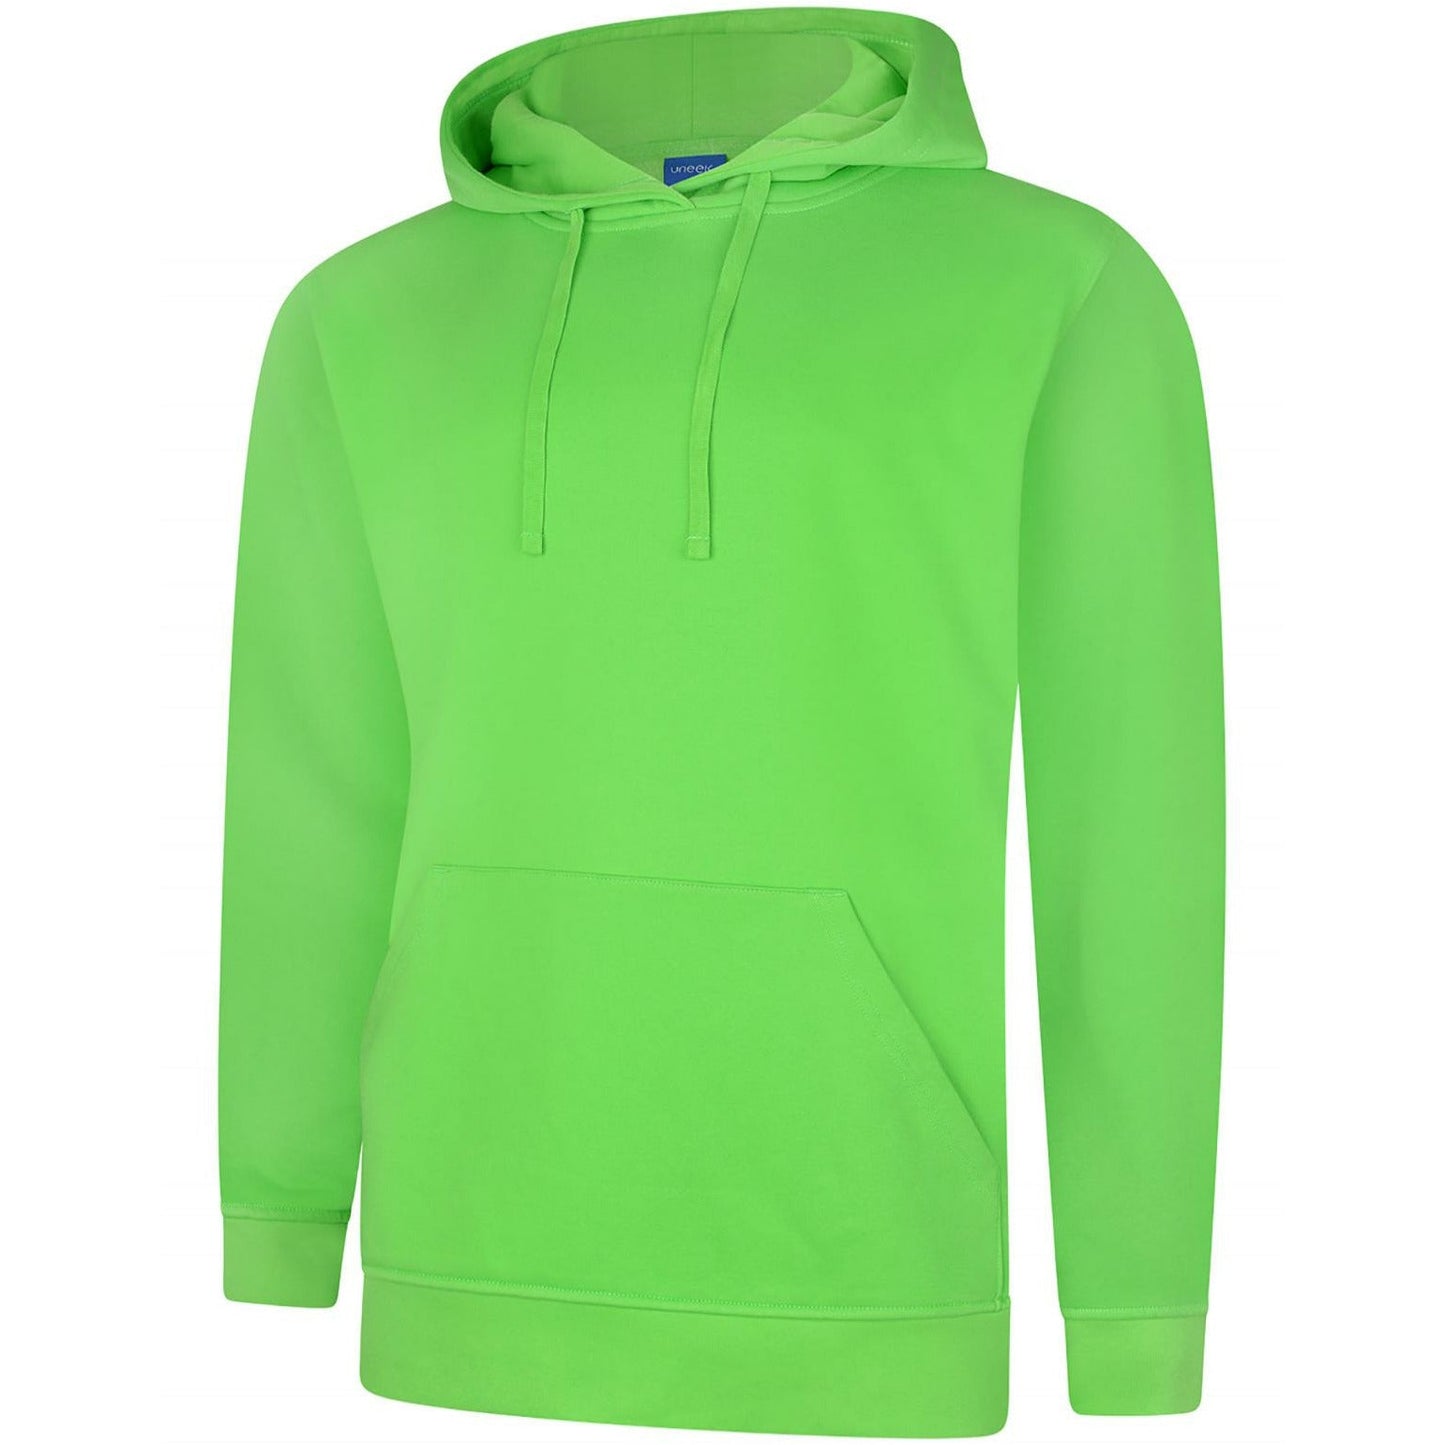 Deluxe Hooded Sweatshirt (XS - M) Lime Green